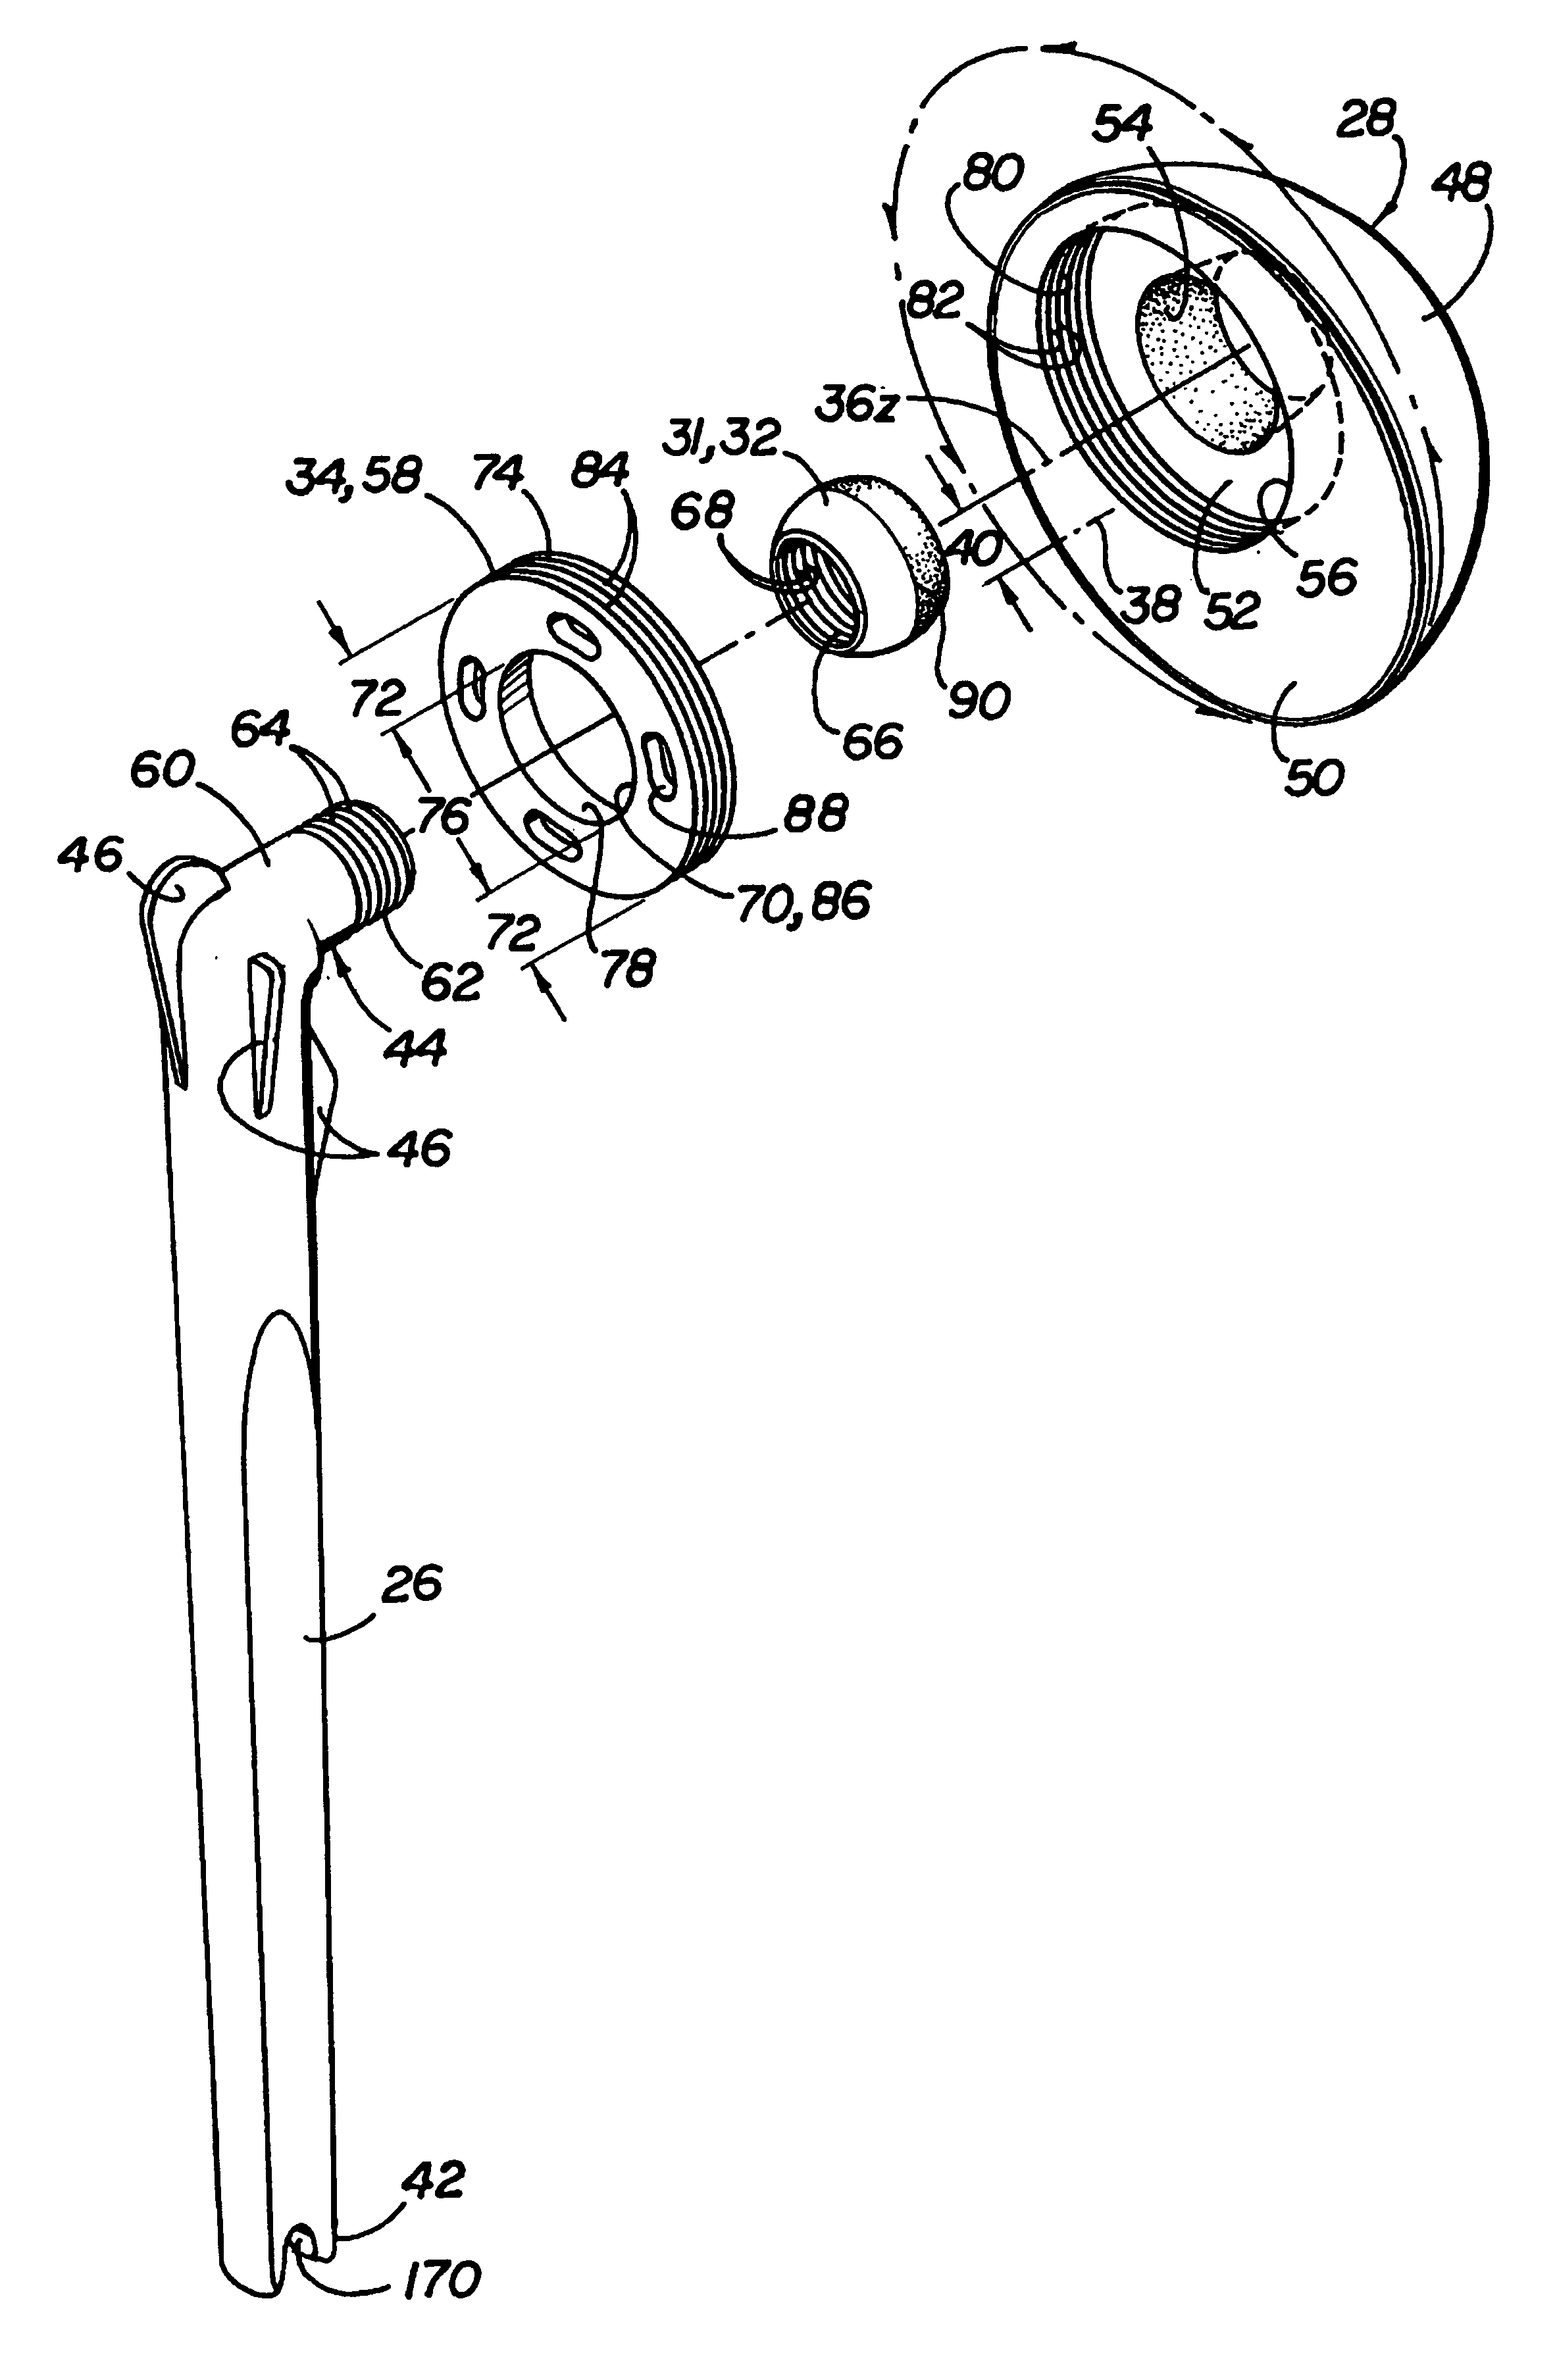 Modular prosthesis system with novel locking mechanism